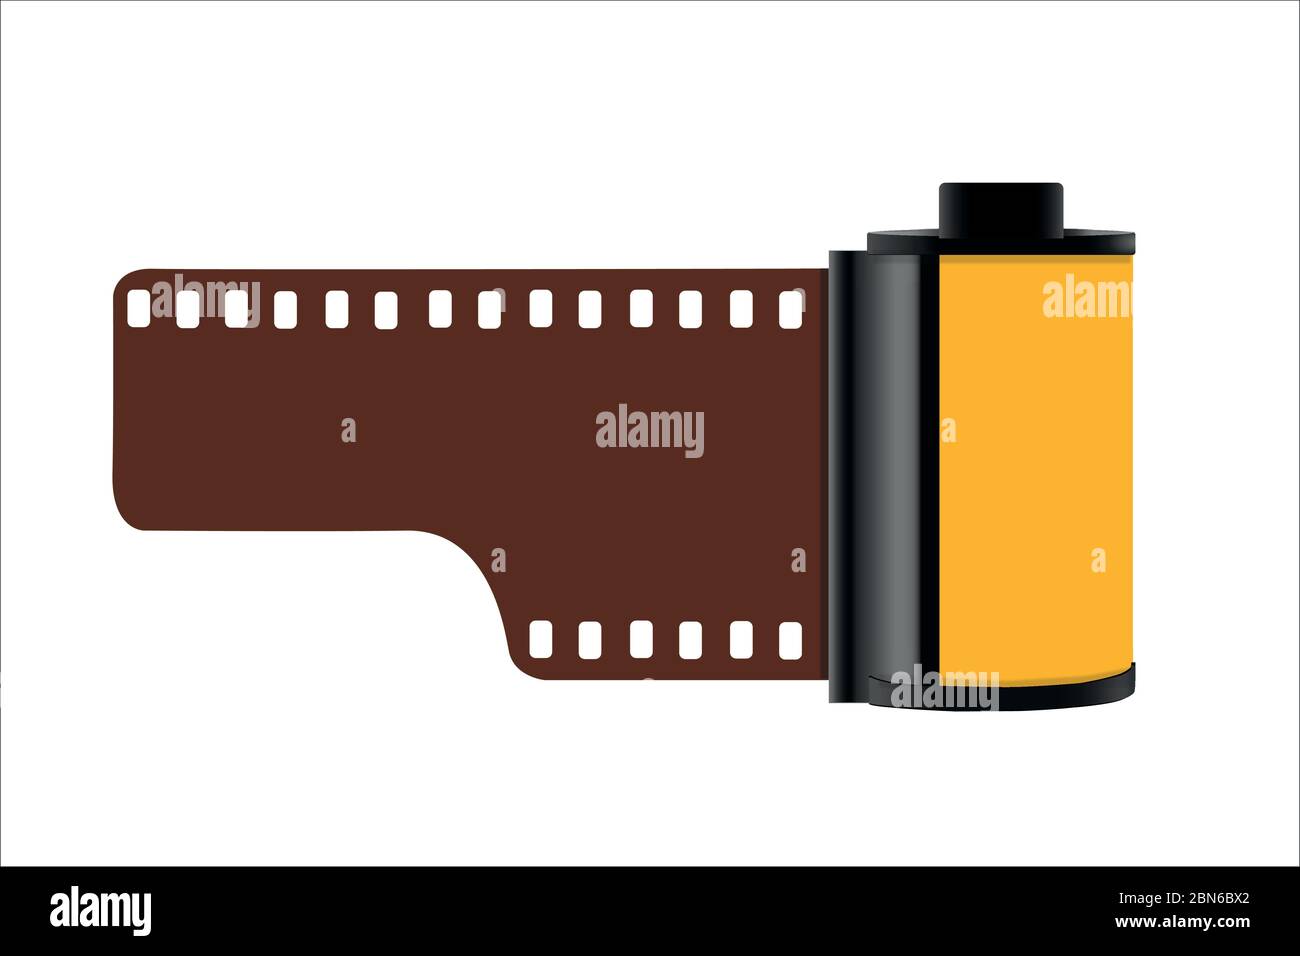 Films 35mm films -  analogue photography